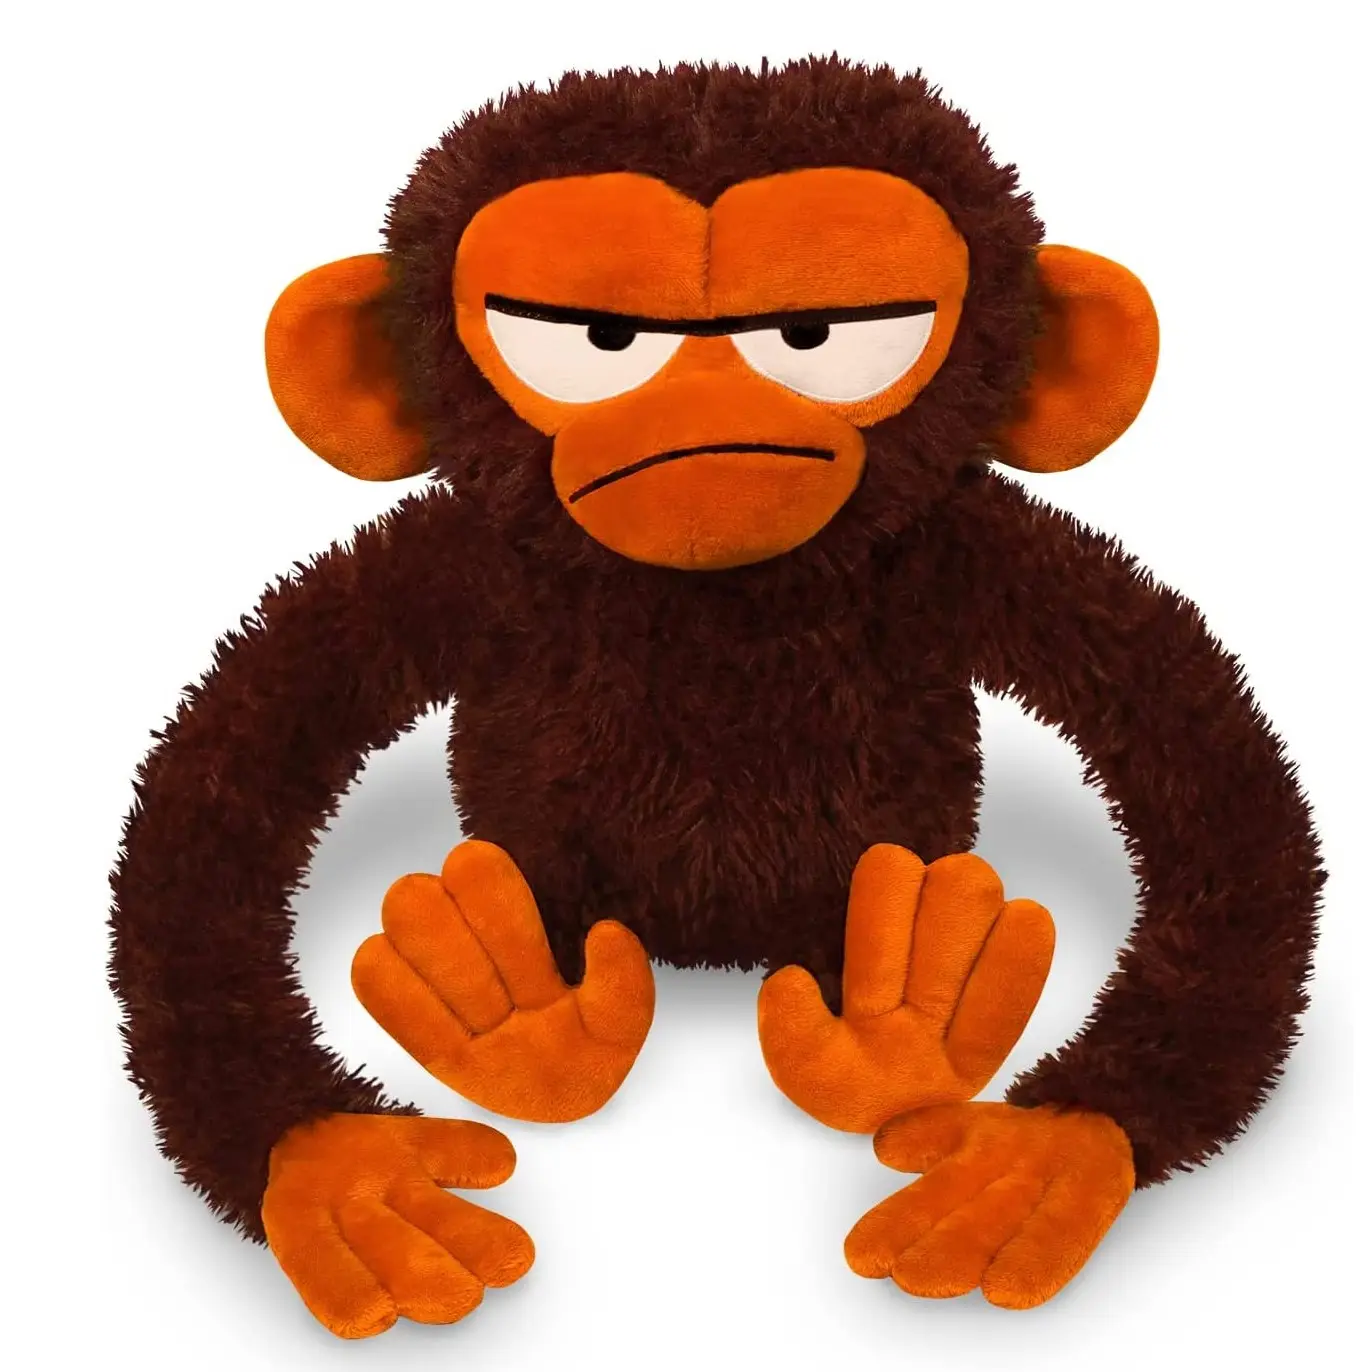 wholesaler customized Plush anger monkey soft toy stuffed animal grumpy monkey doll